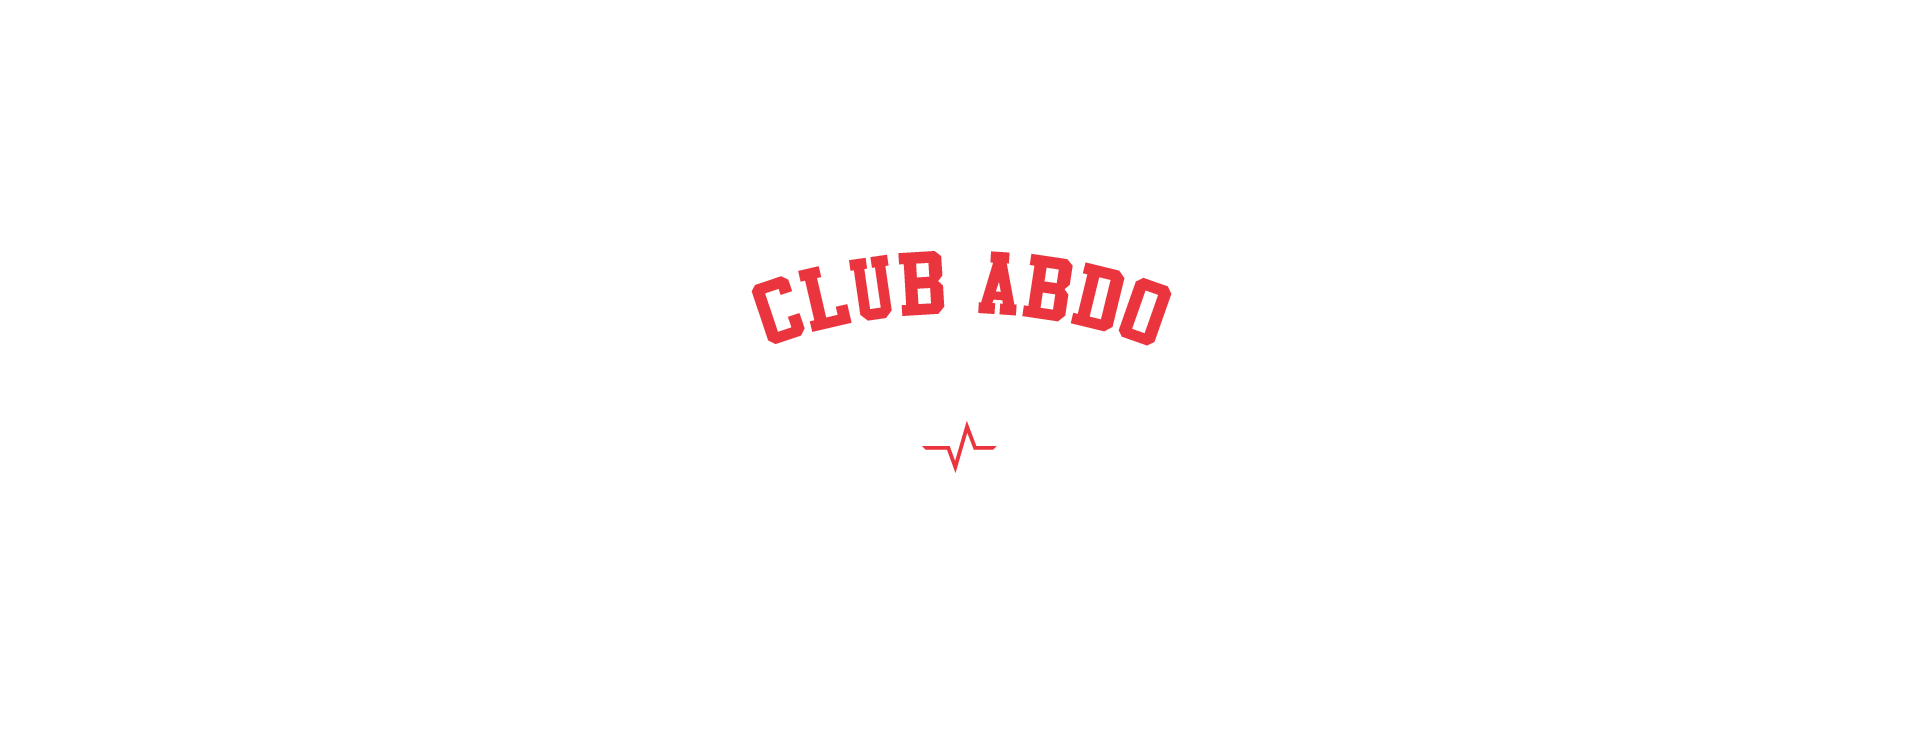 creation-design-joli-logo-original-moderne-minimaliste-club-abdo